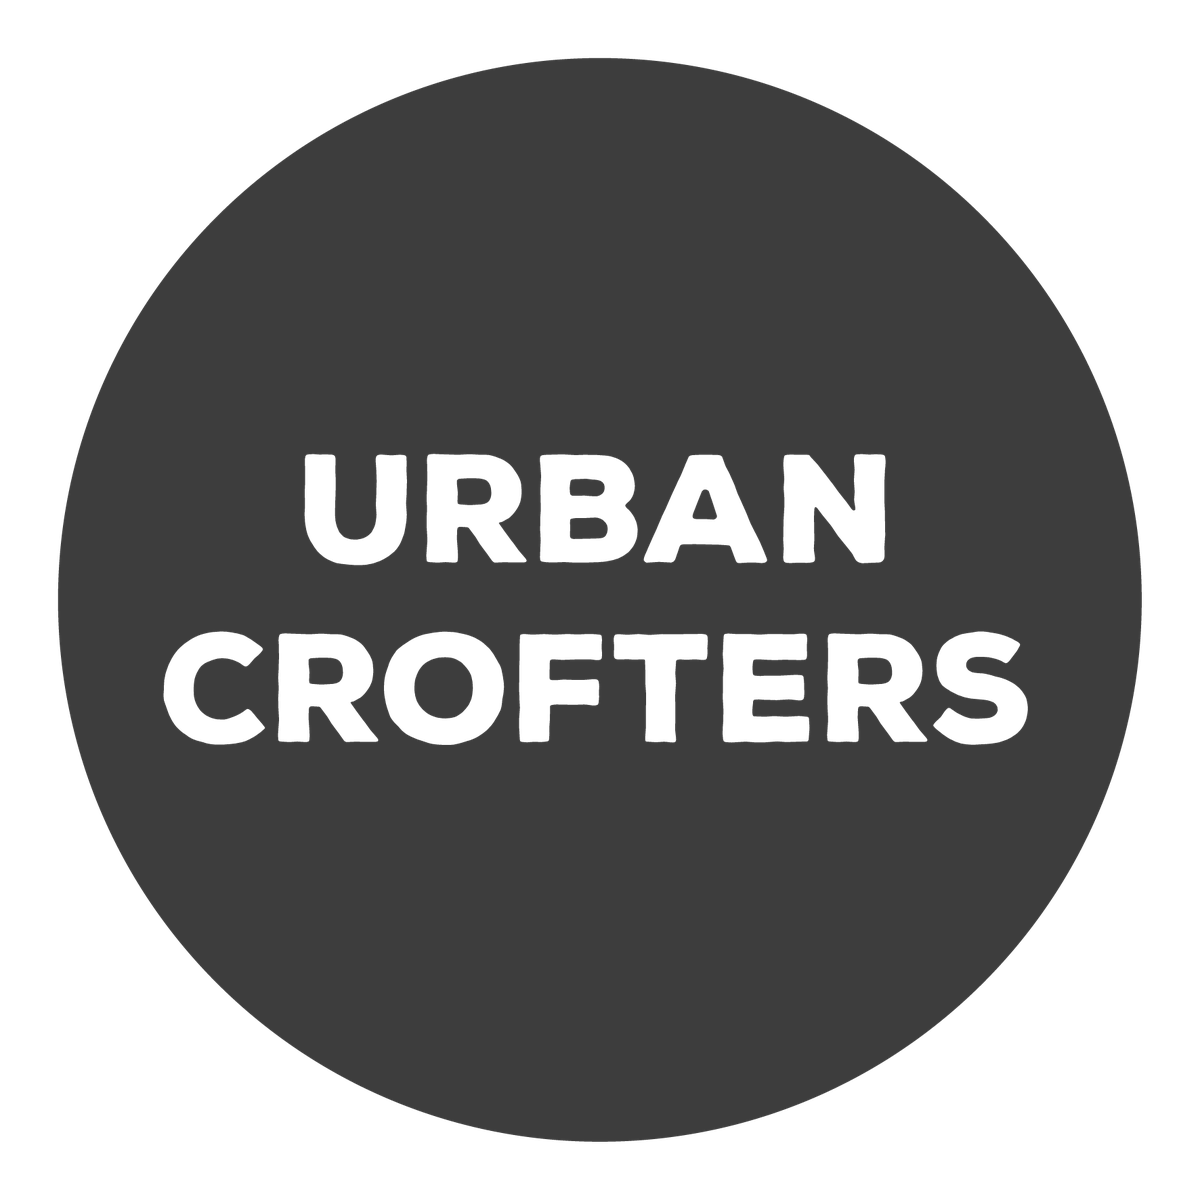 Urban Crofters logo